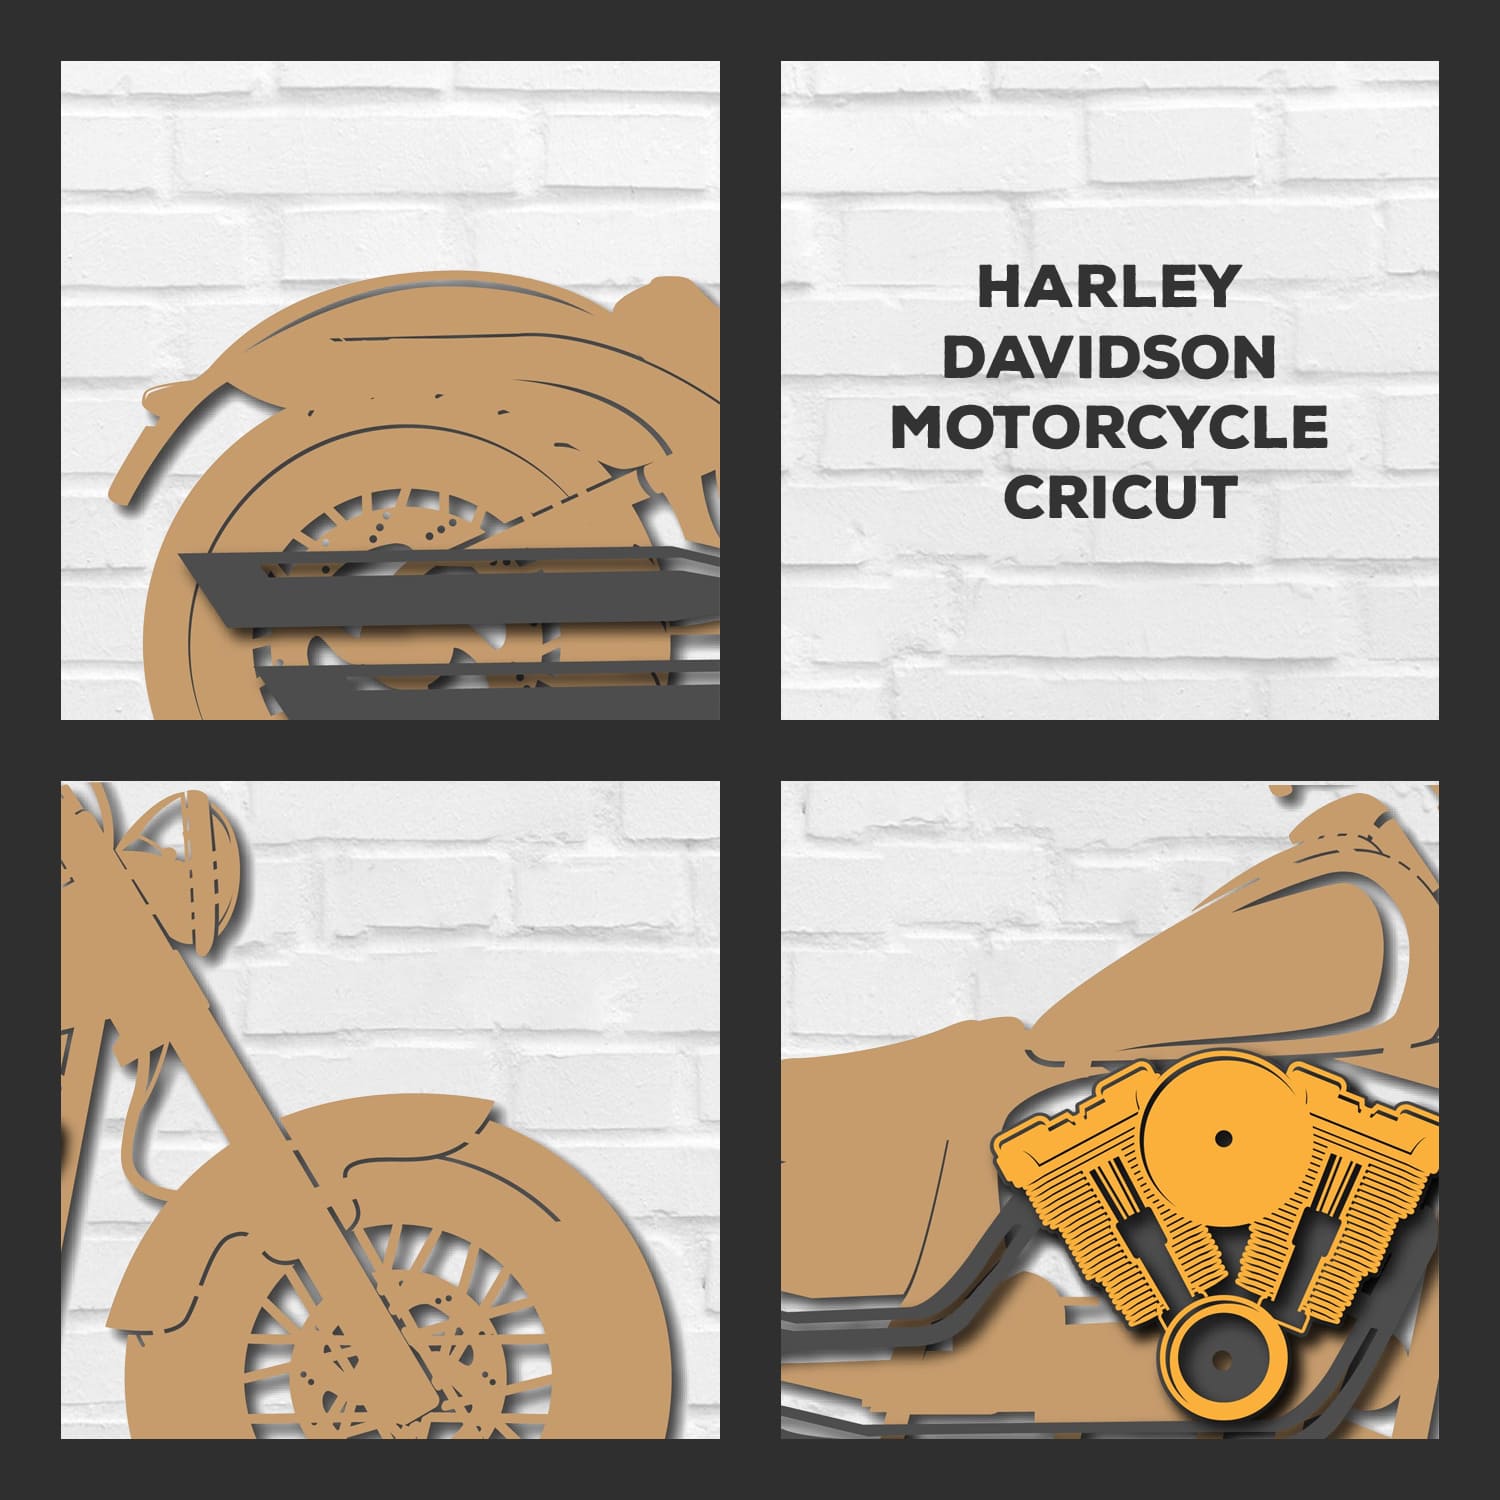 Harley davidson motorcycle cricut created by CricutLaserArt.